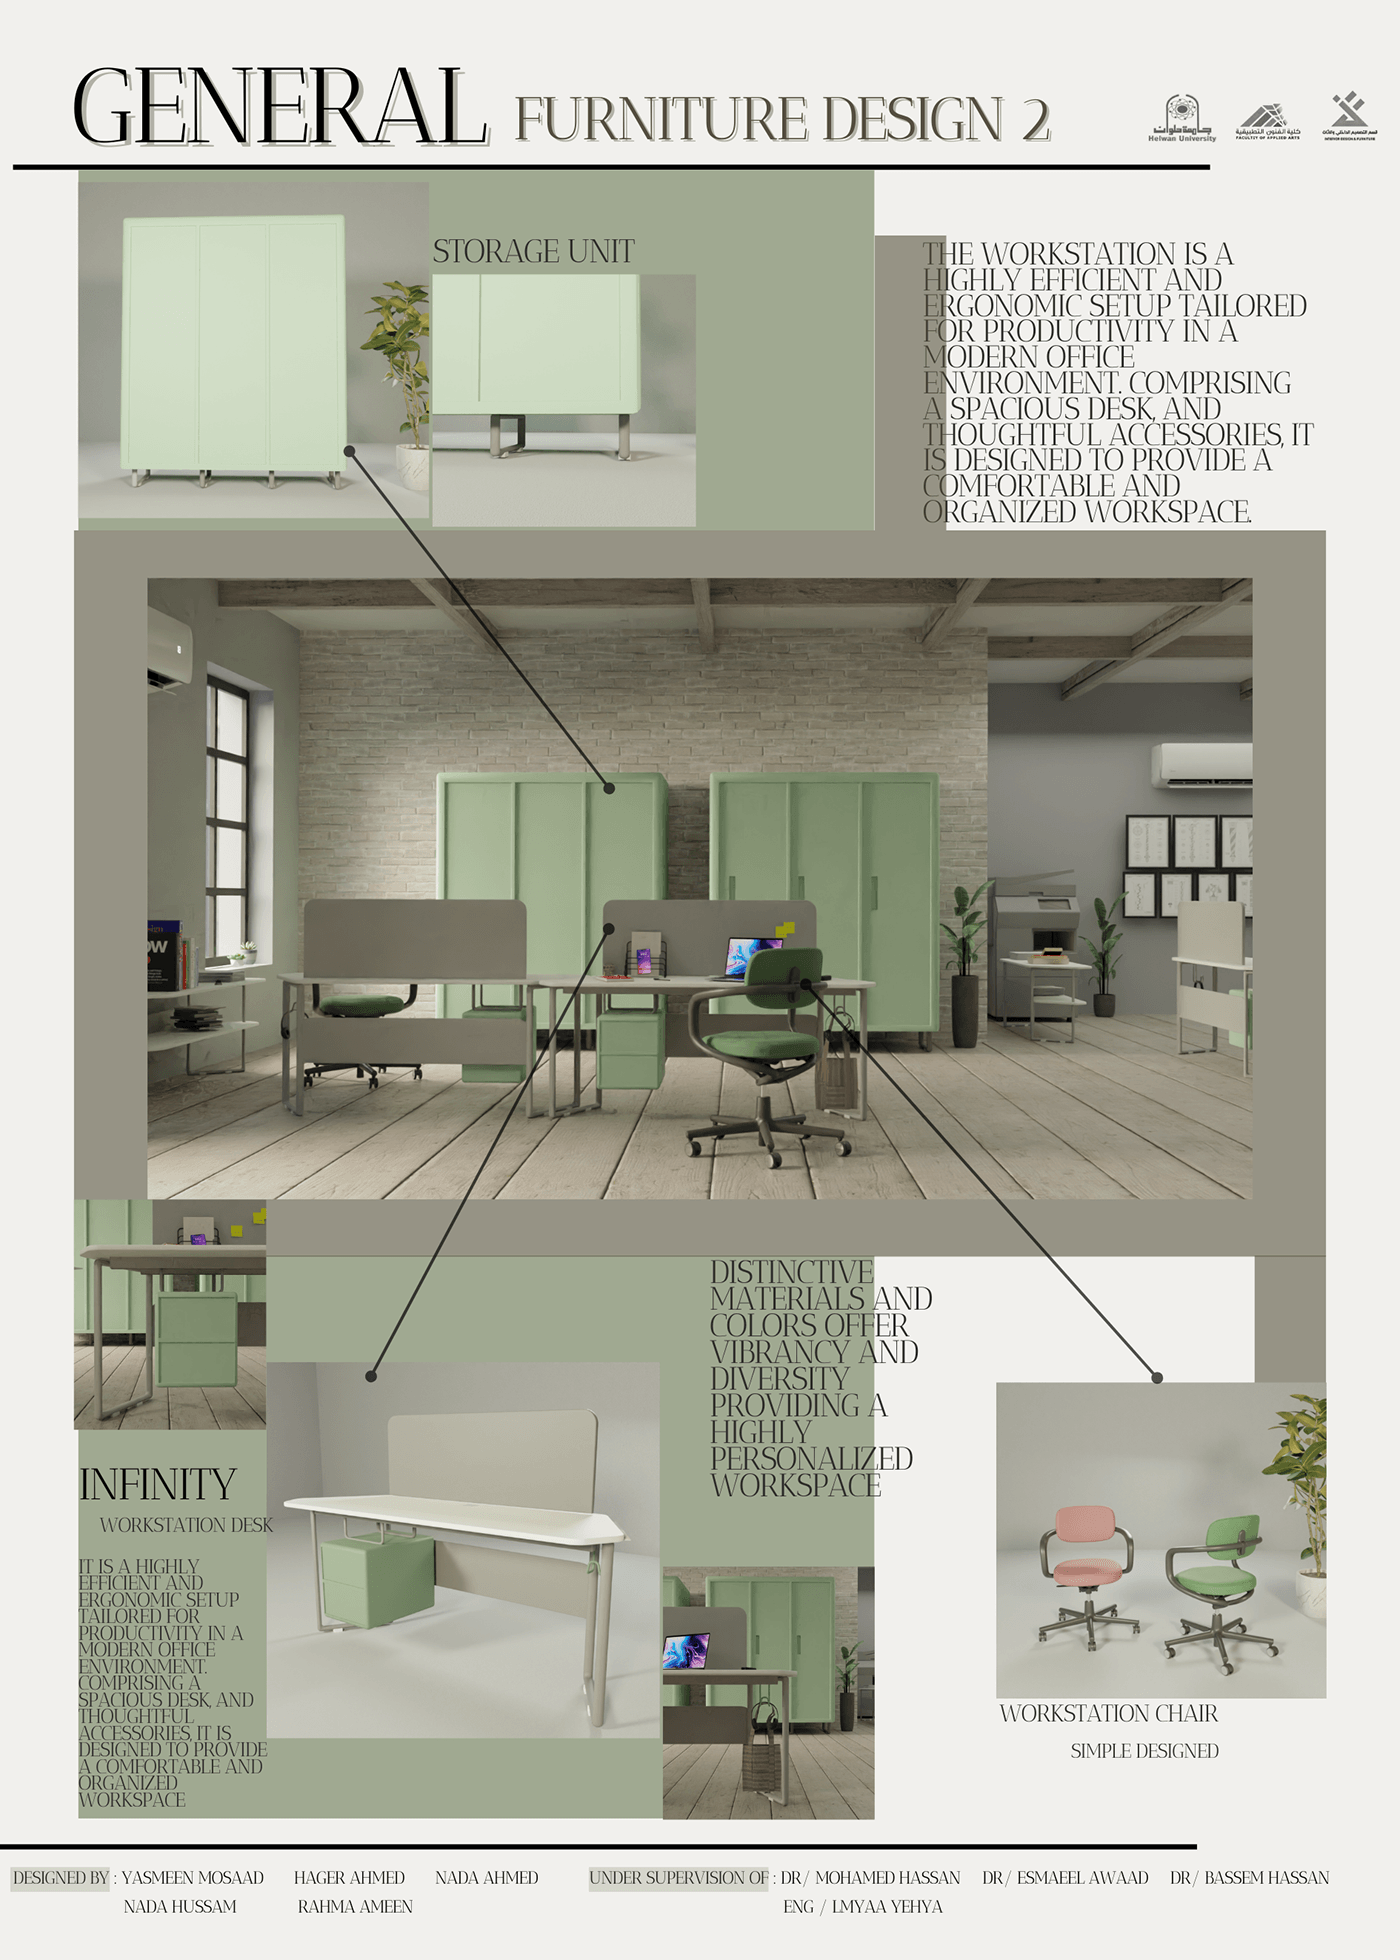 administration interior design  Manager room office furniture Office Administration design workstation design